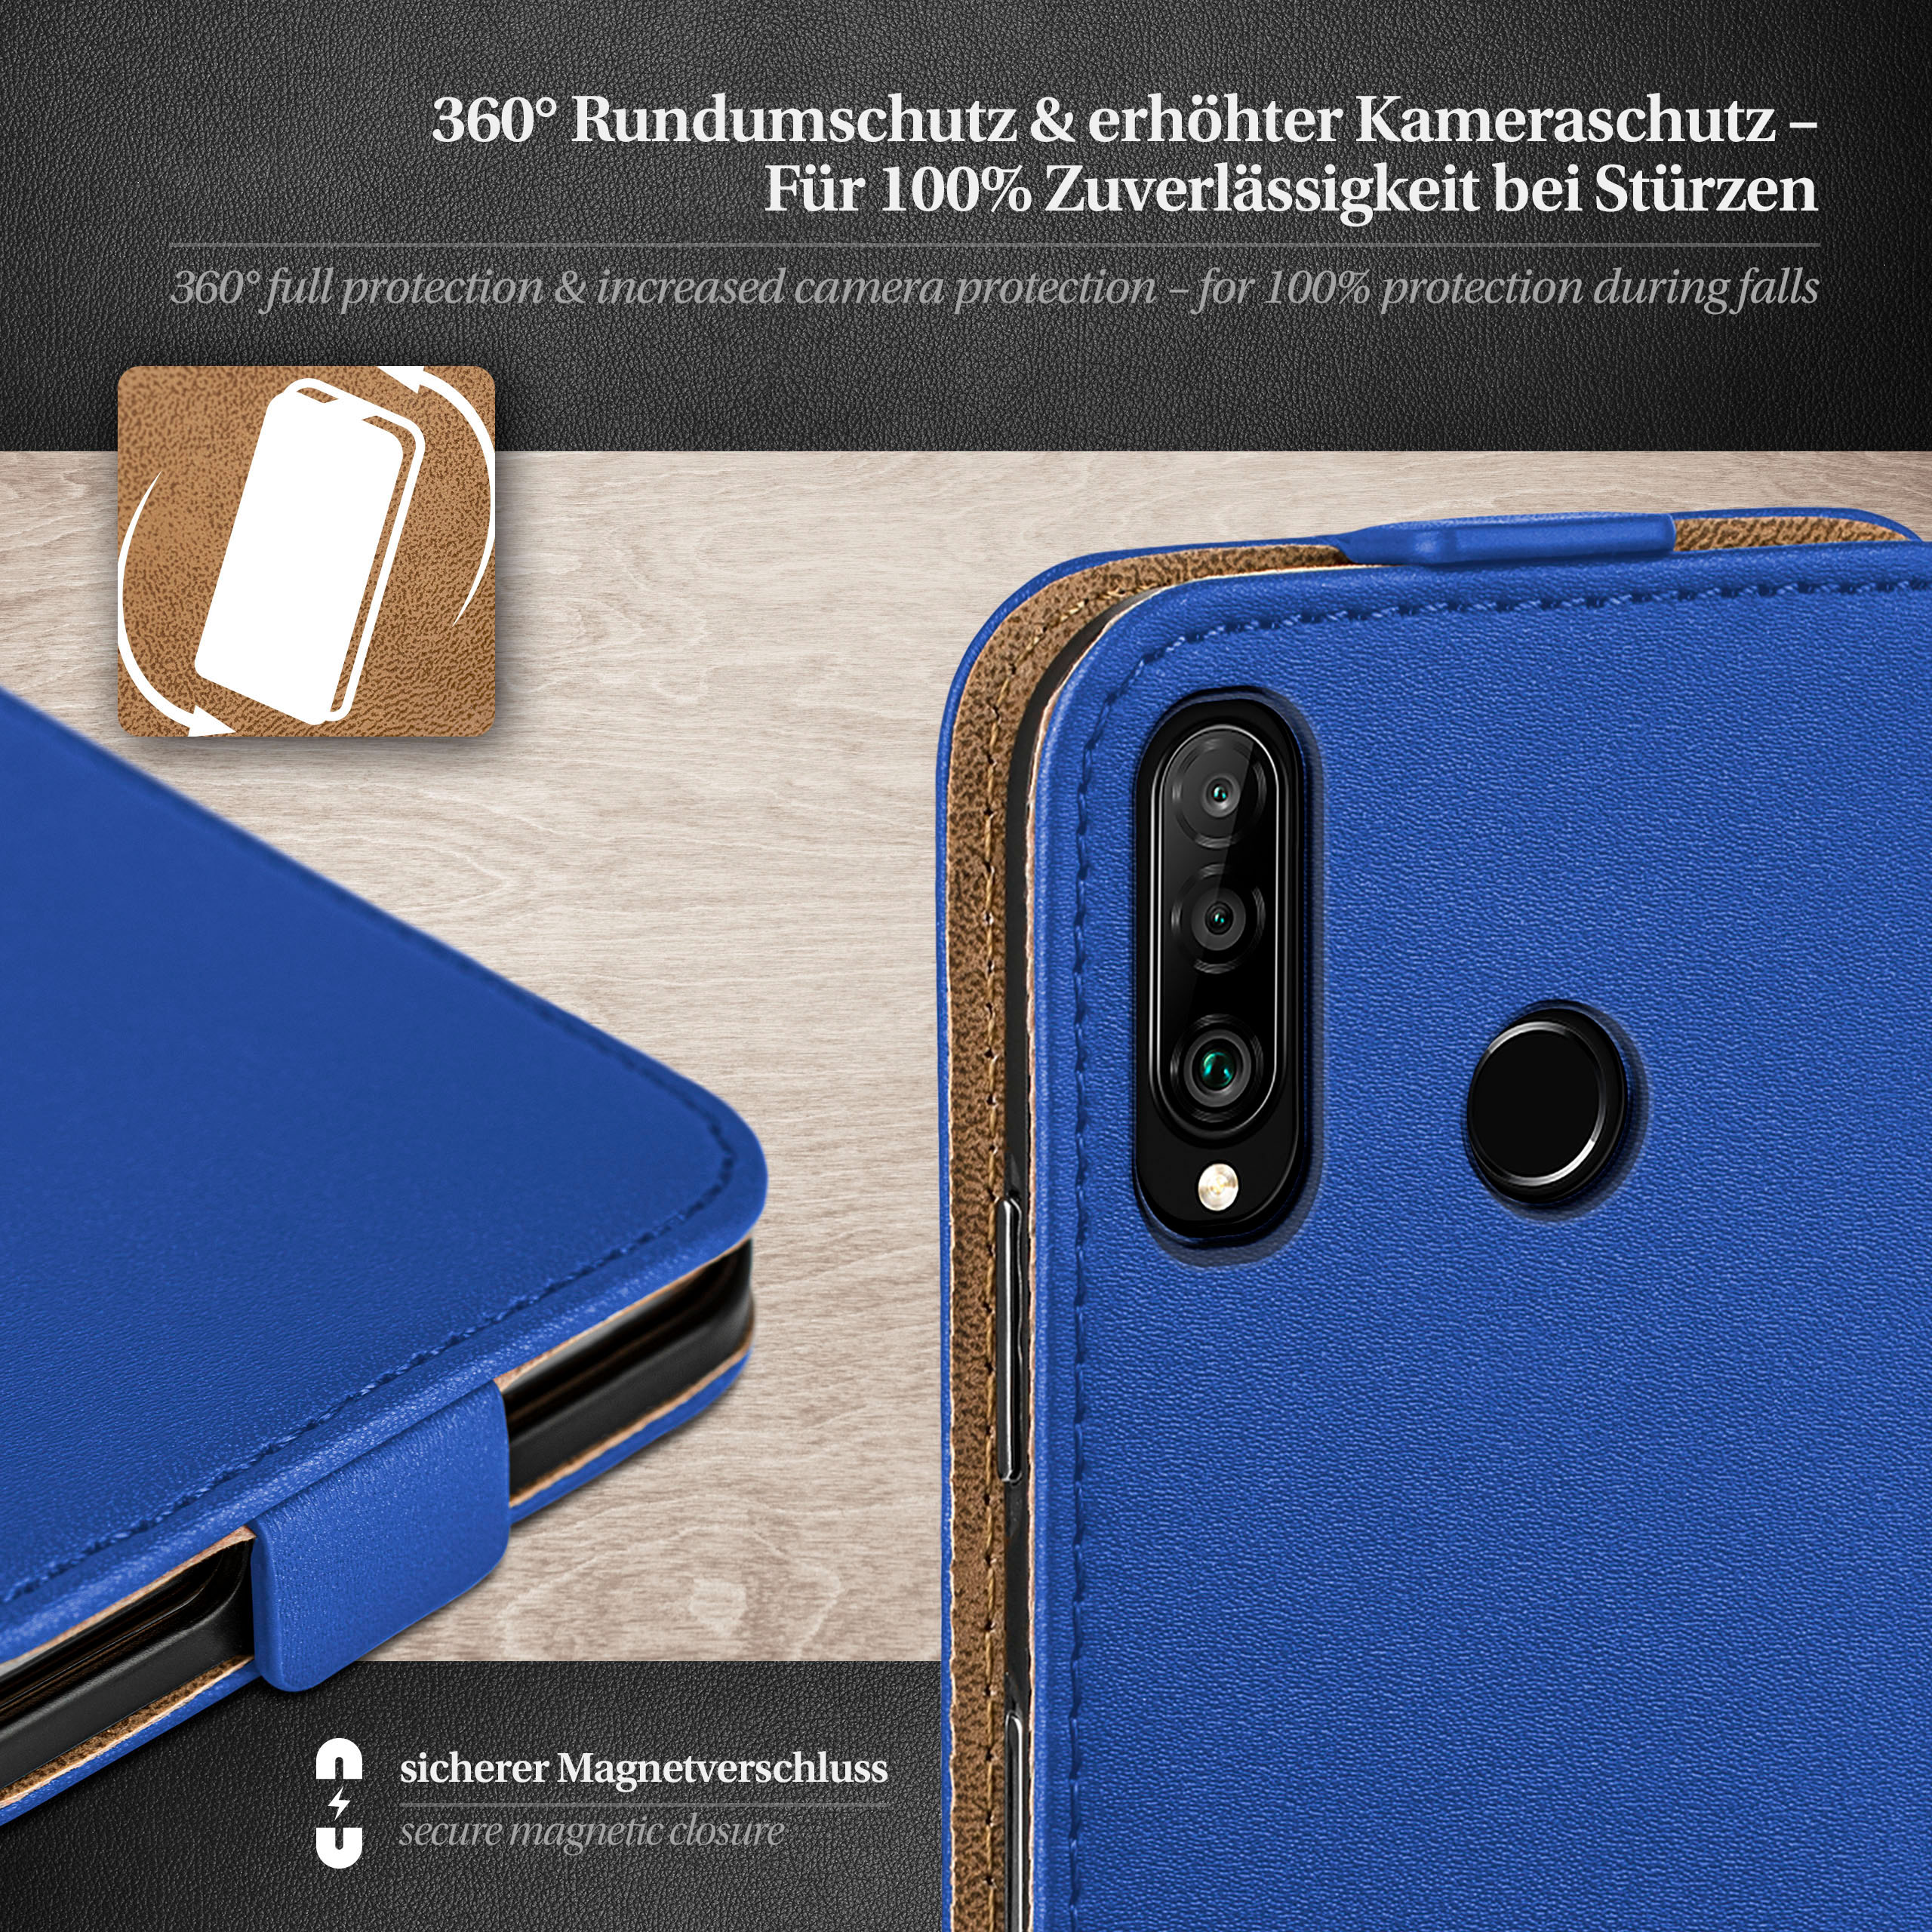 P30 Cover, Flip Flip Lite/P30 MOEX Lite Case, Royal-Blue New, Huawei,